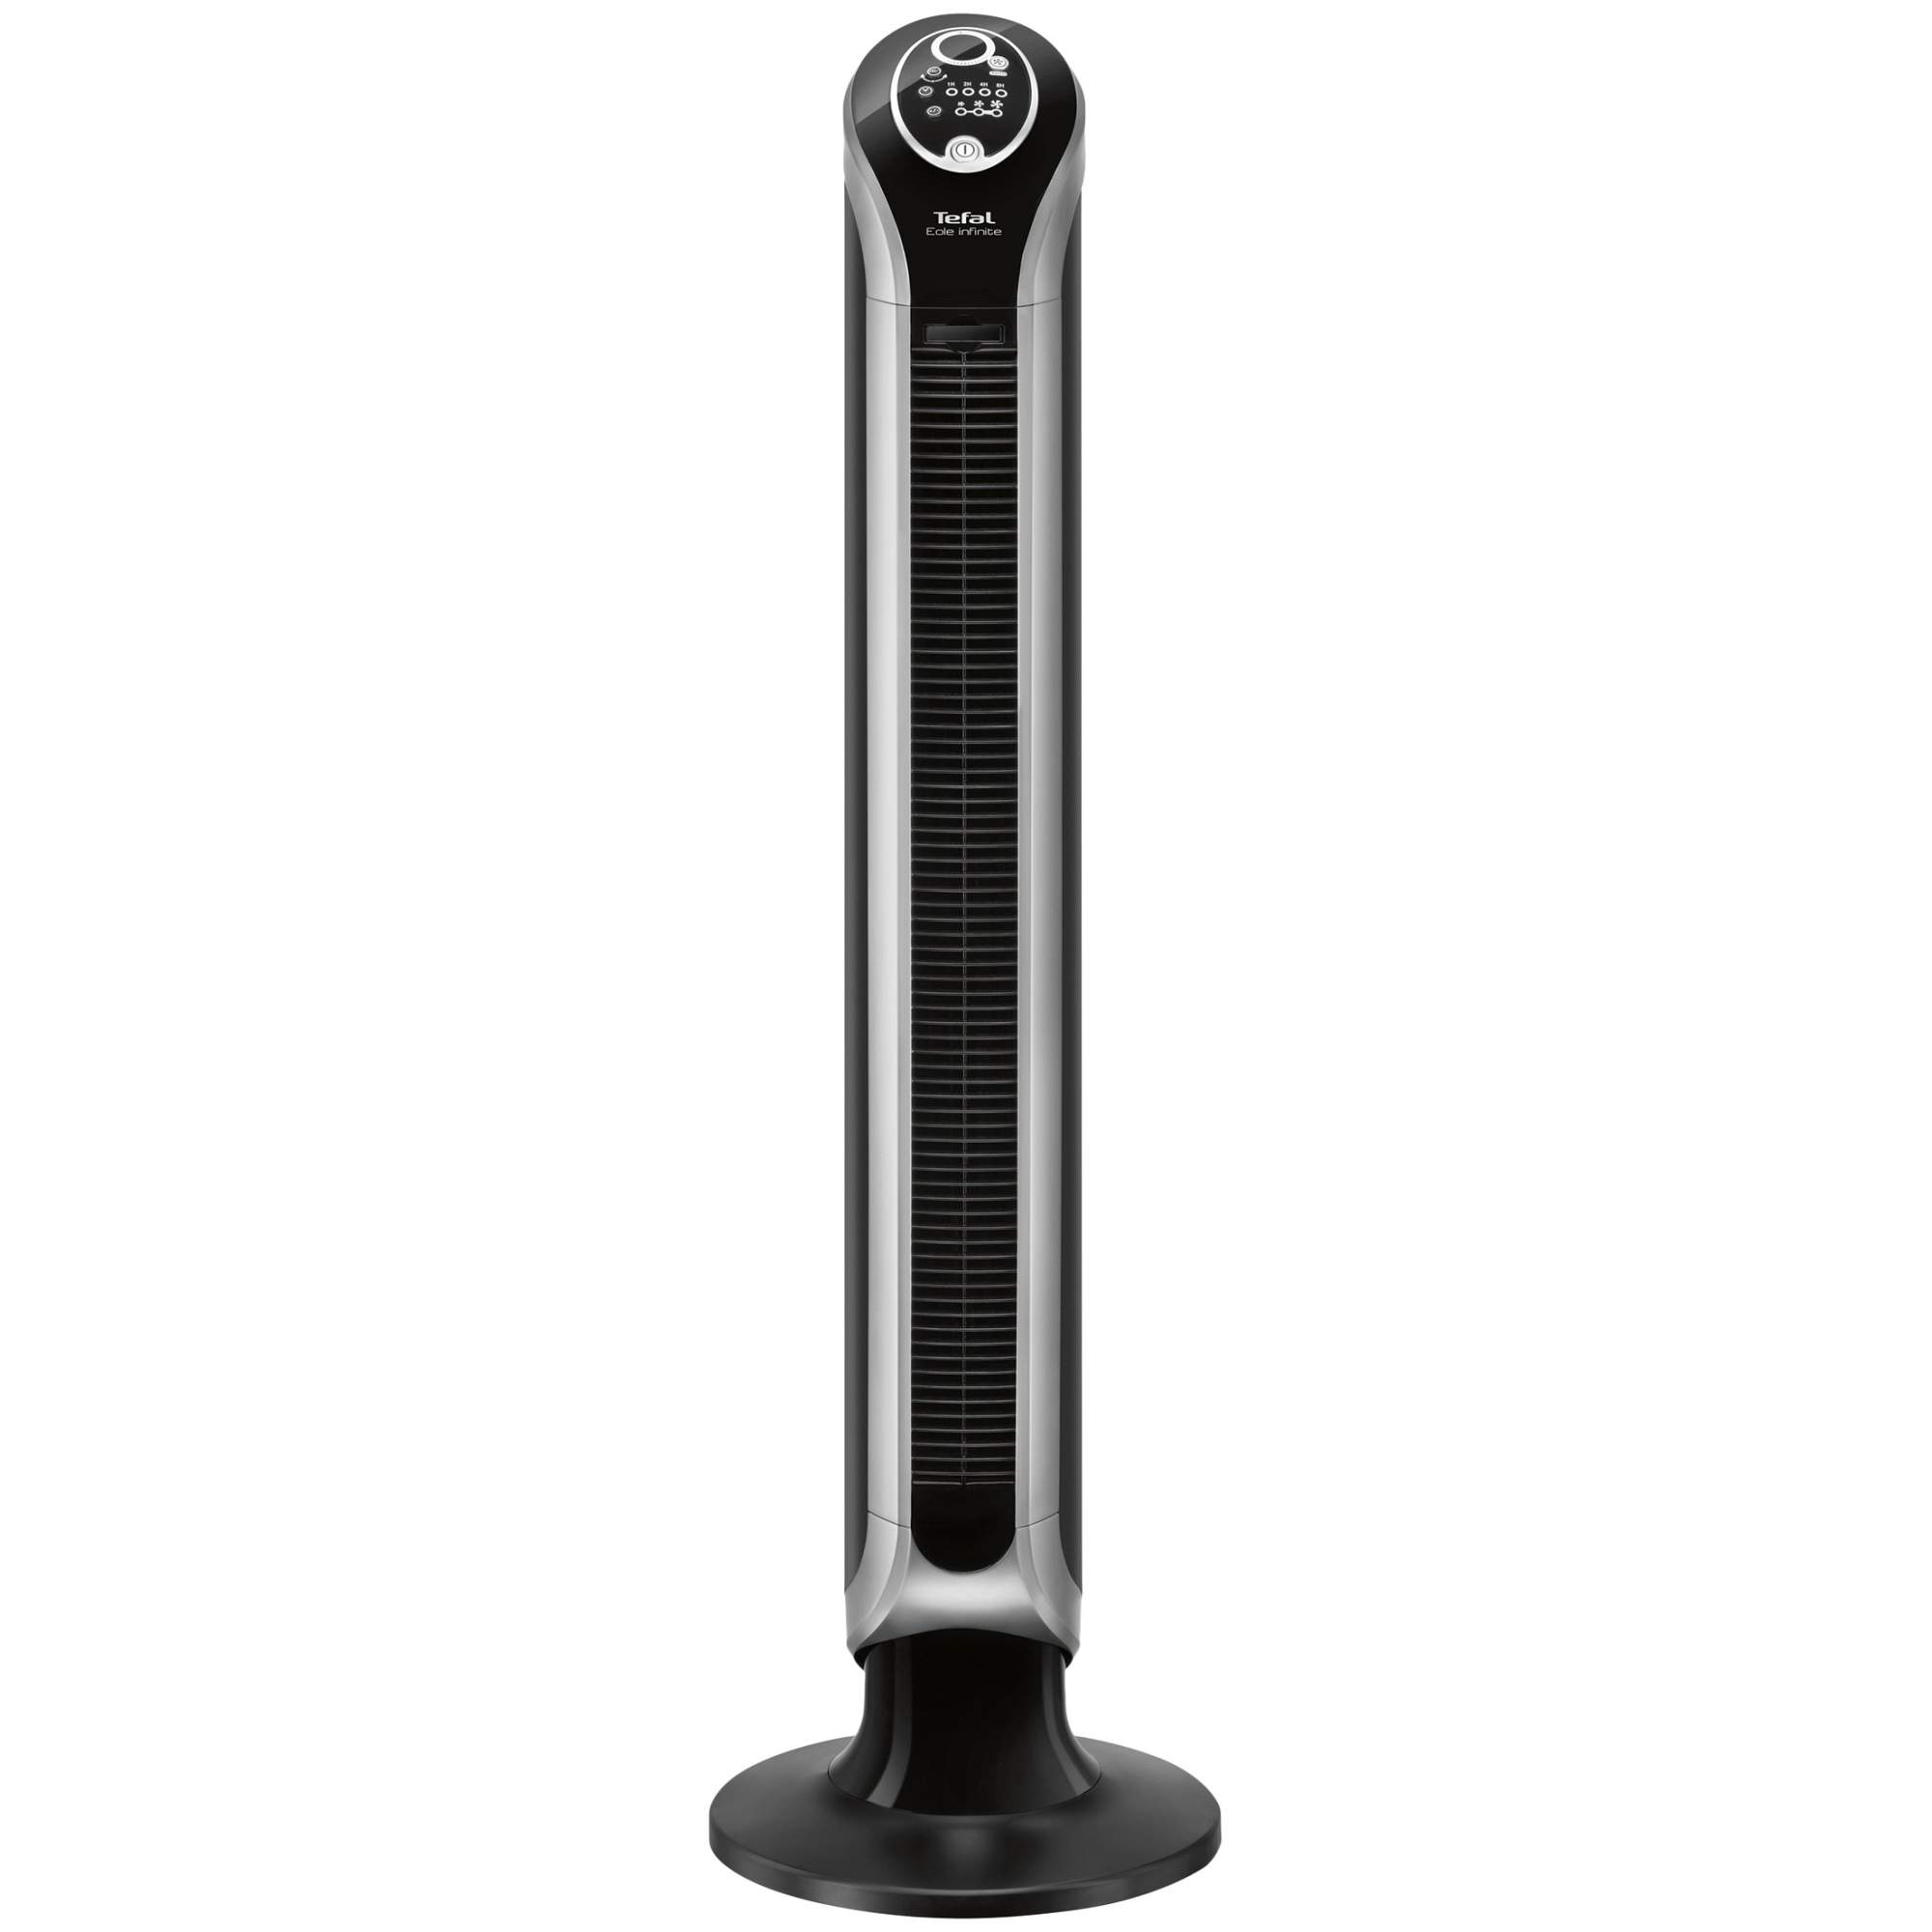 Вентилятор колонный Tefal VF6670 black - отзывы покупателей на маркетплейсе Мегамаркет | Артикул: 100002527446